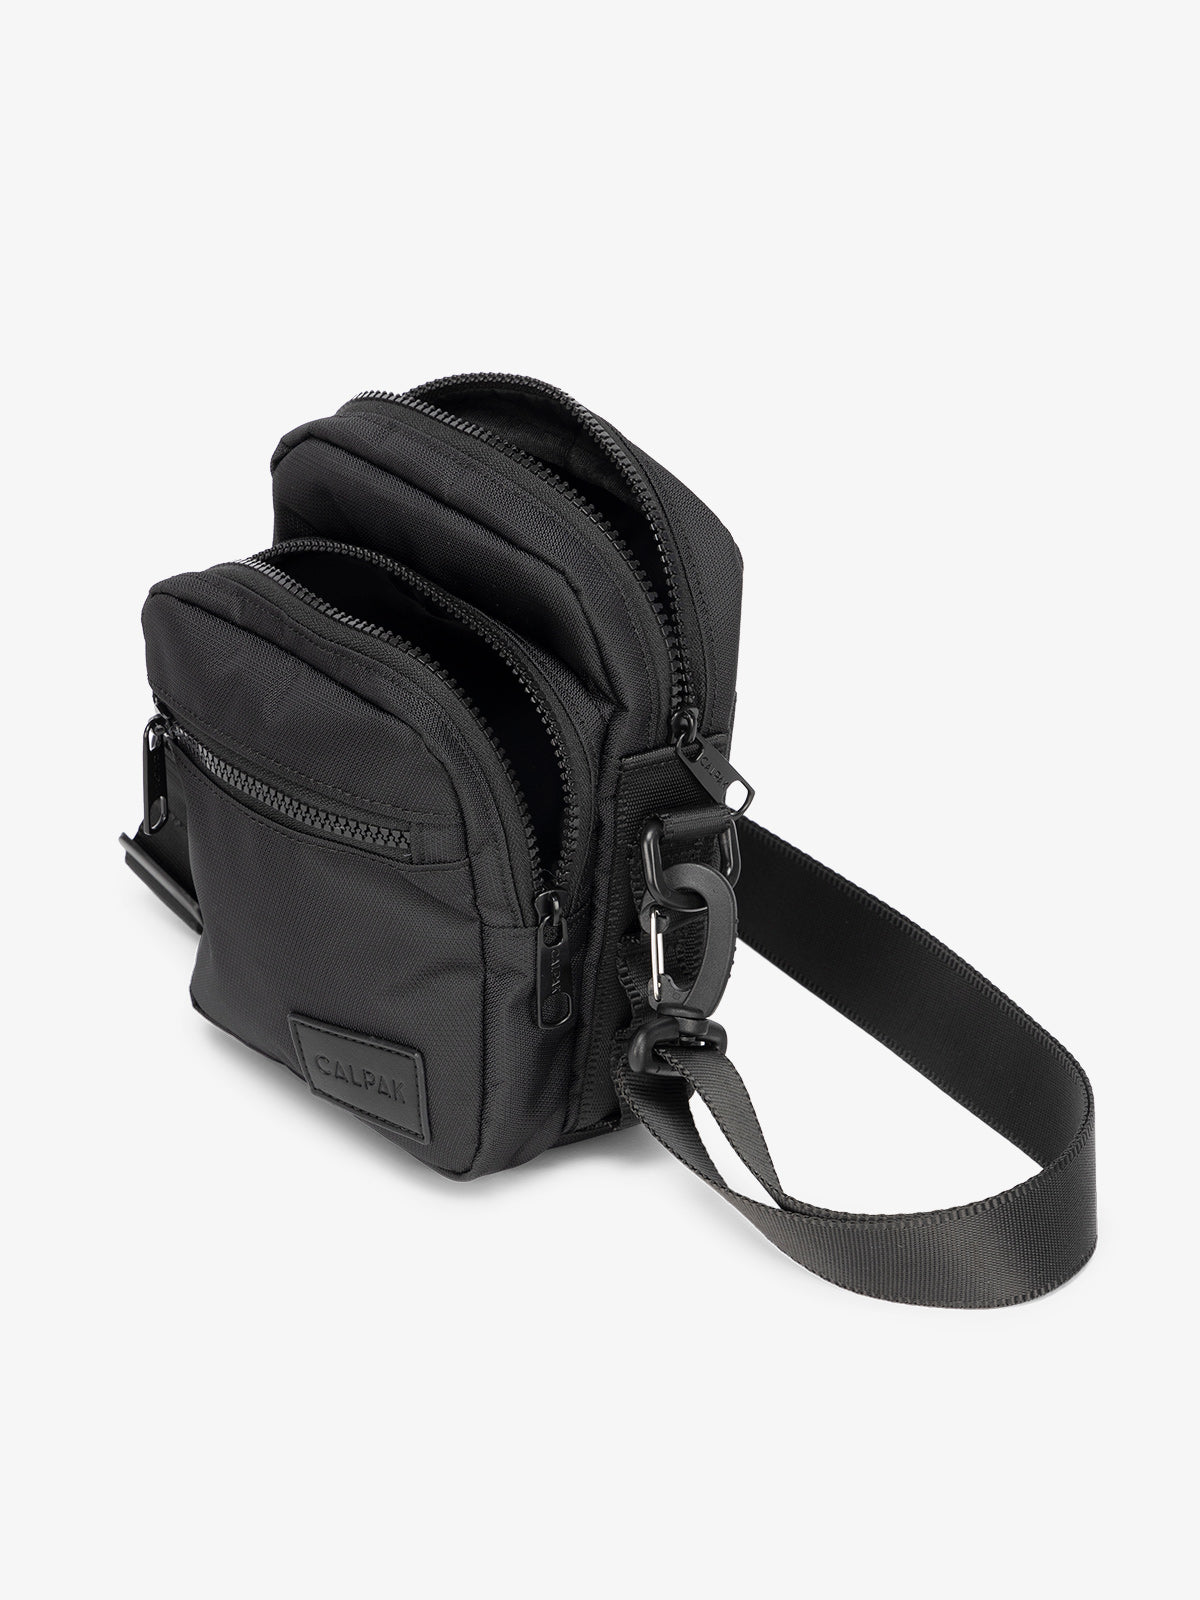 Black CALPAK Stevyn Mini Crossbody Bag with adjustable shoulder strap, zippered pockets, and interior zipper pocket